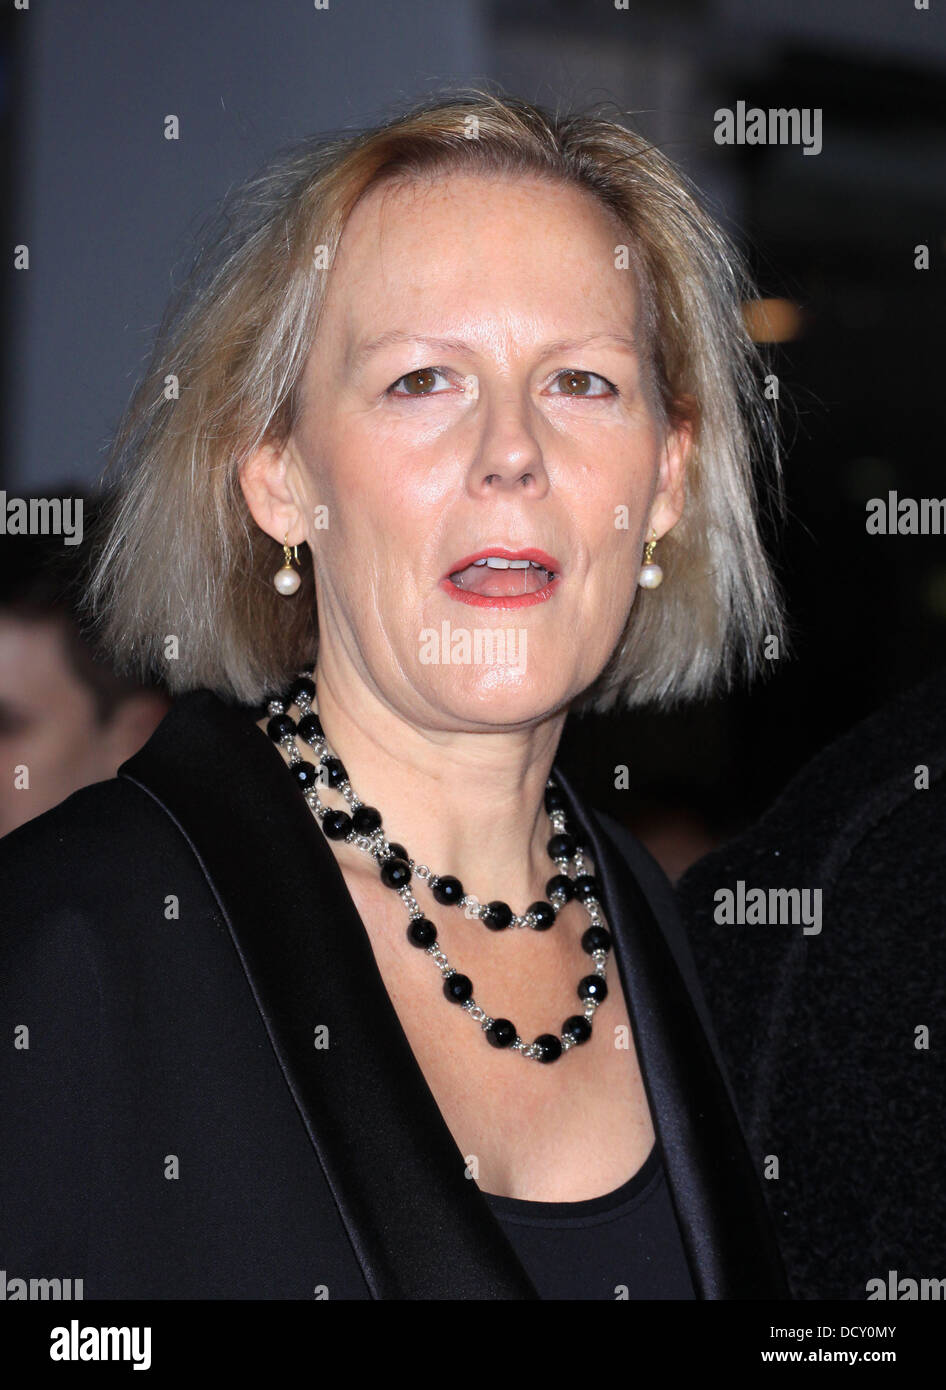 Phyllida Lloyd " La Signora di ferro' UK film Premiere detenute al BFI Southbank arrivi - Londra, Inghilterra - 04.01.12 Foto Stock